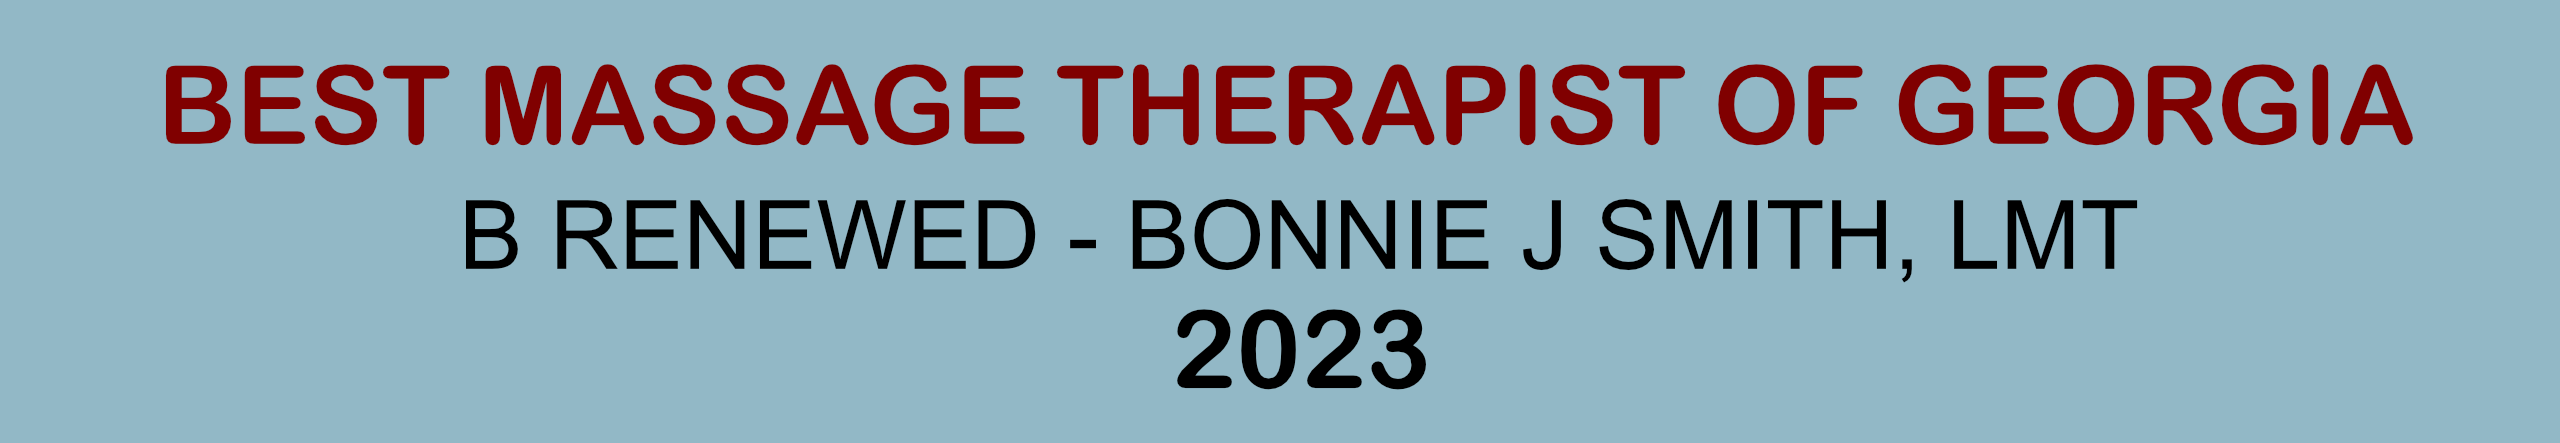 B Renewed by Bonnie J Smith, LMT Best Massage Therapist of Georgia 2023